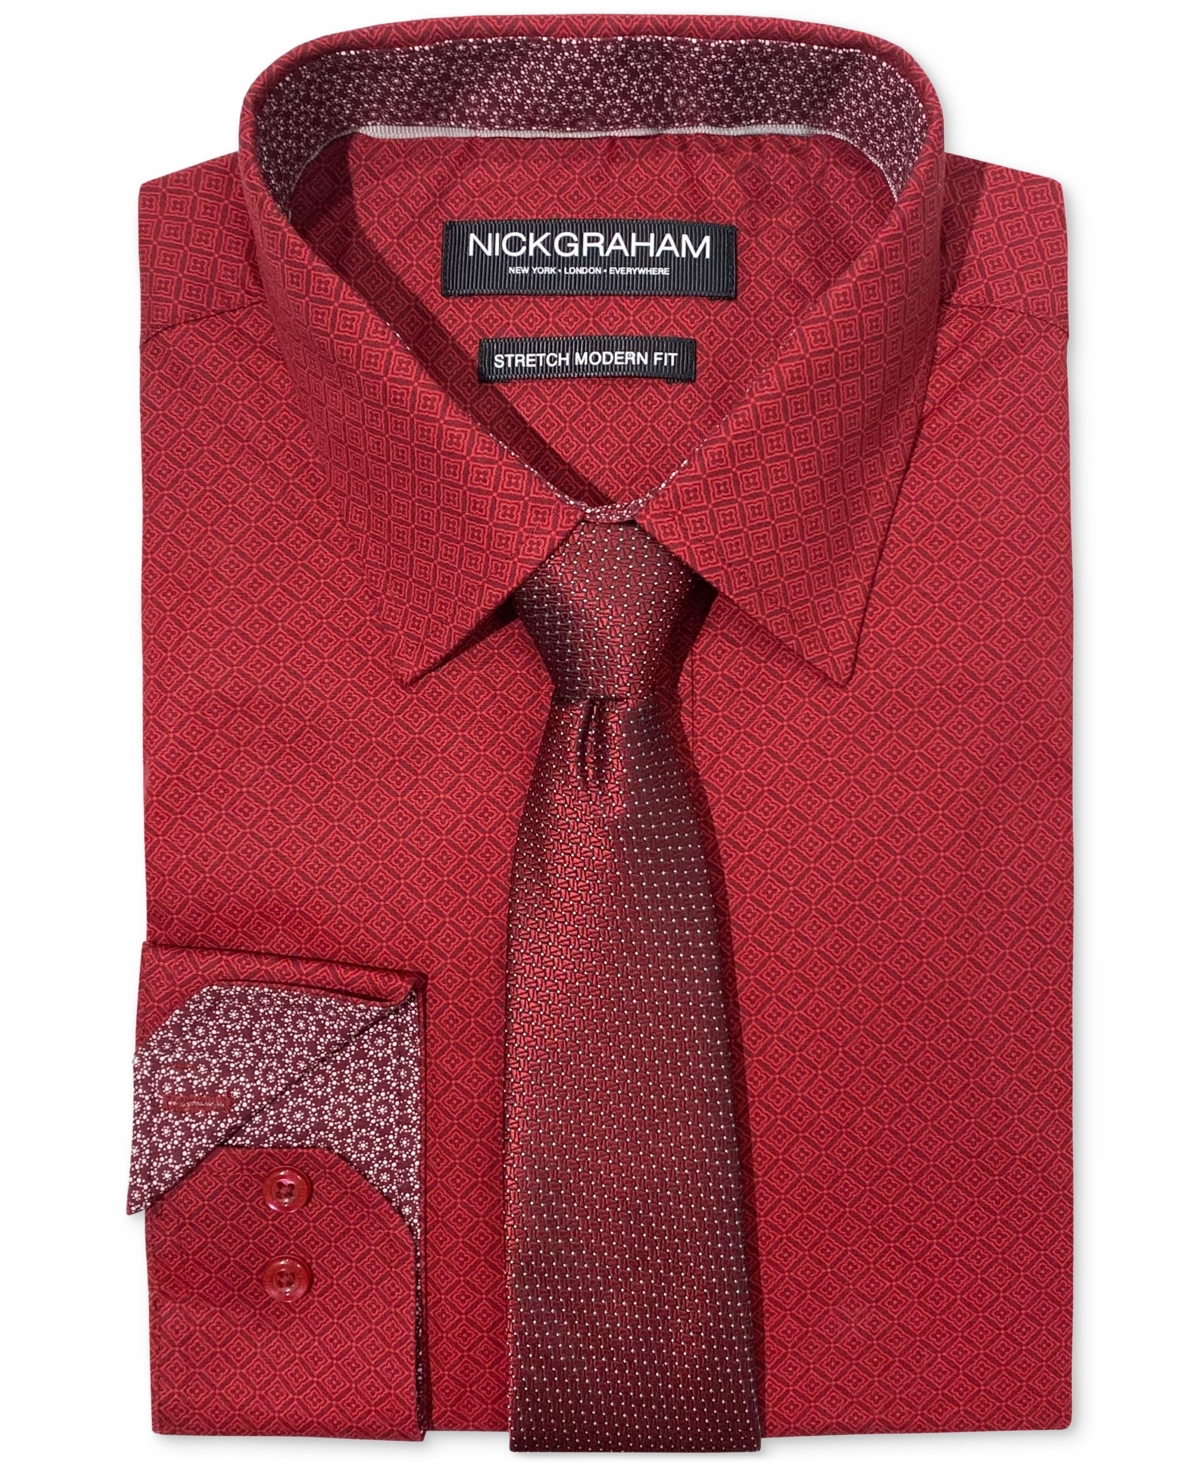 Men's Slim-Fit Diamond Medallion Dress Shirt & Tie Set - Red Multi